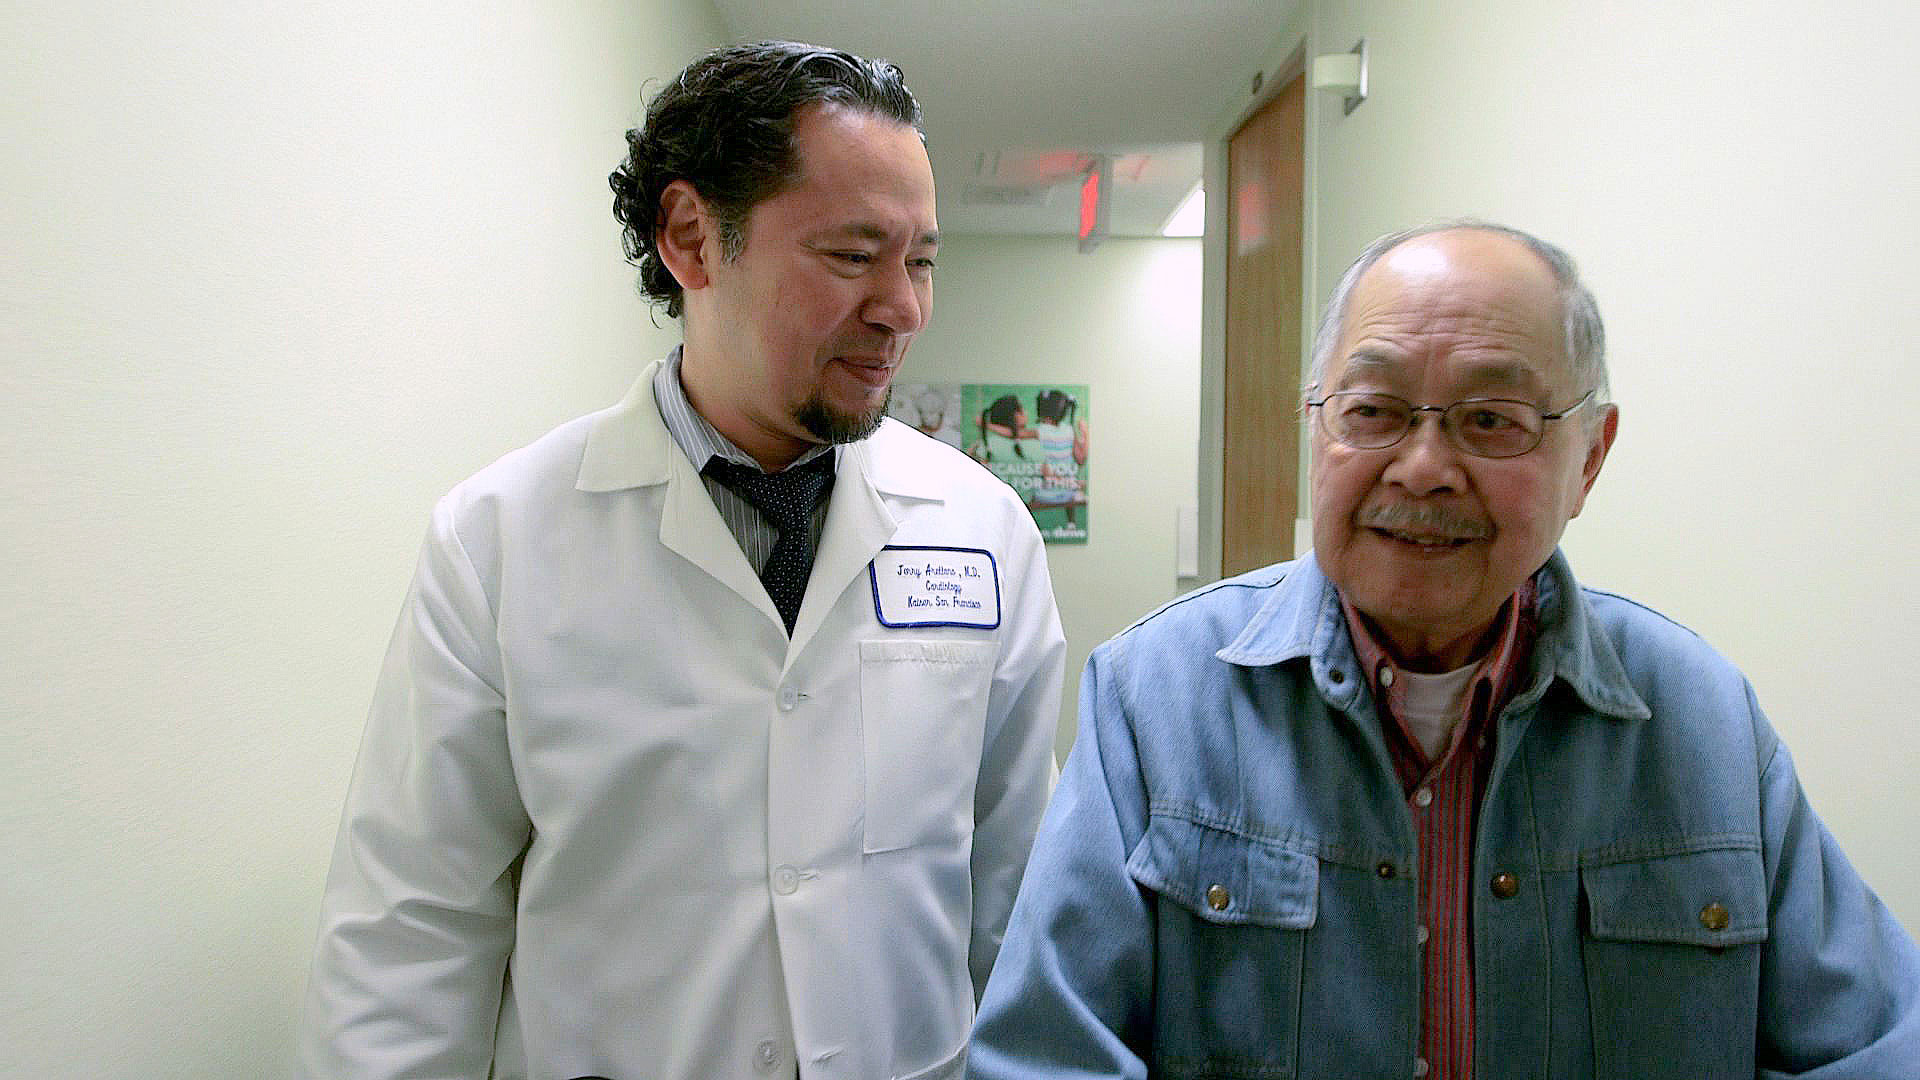 Photo of Jerry in a white doctor's coat walking alongside Wilmer.